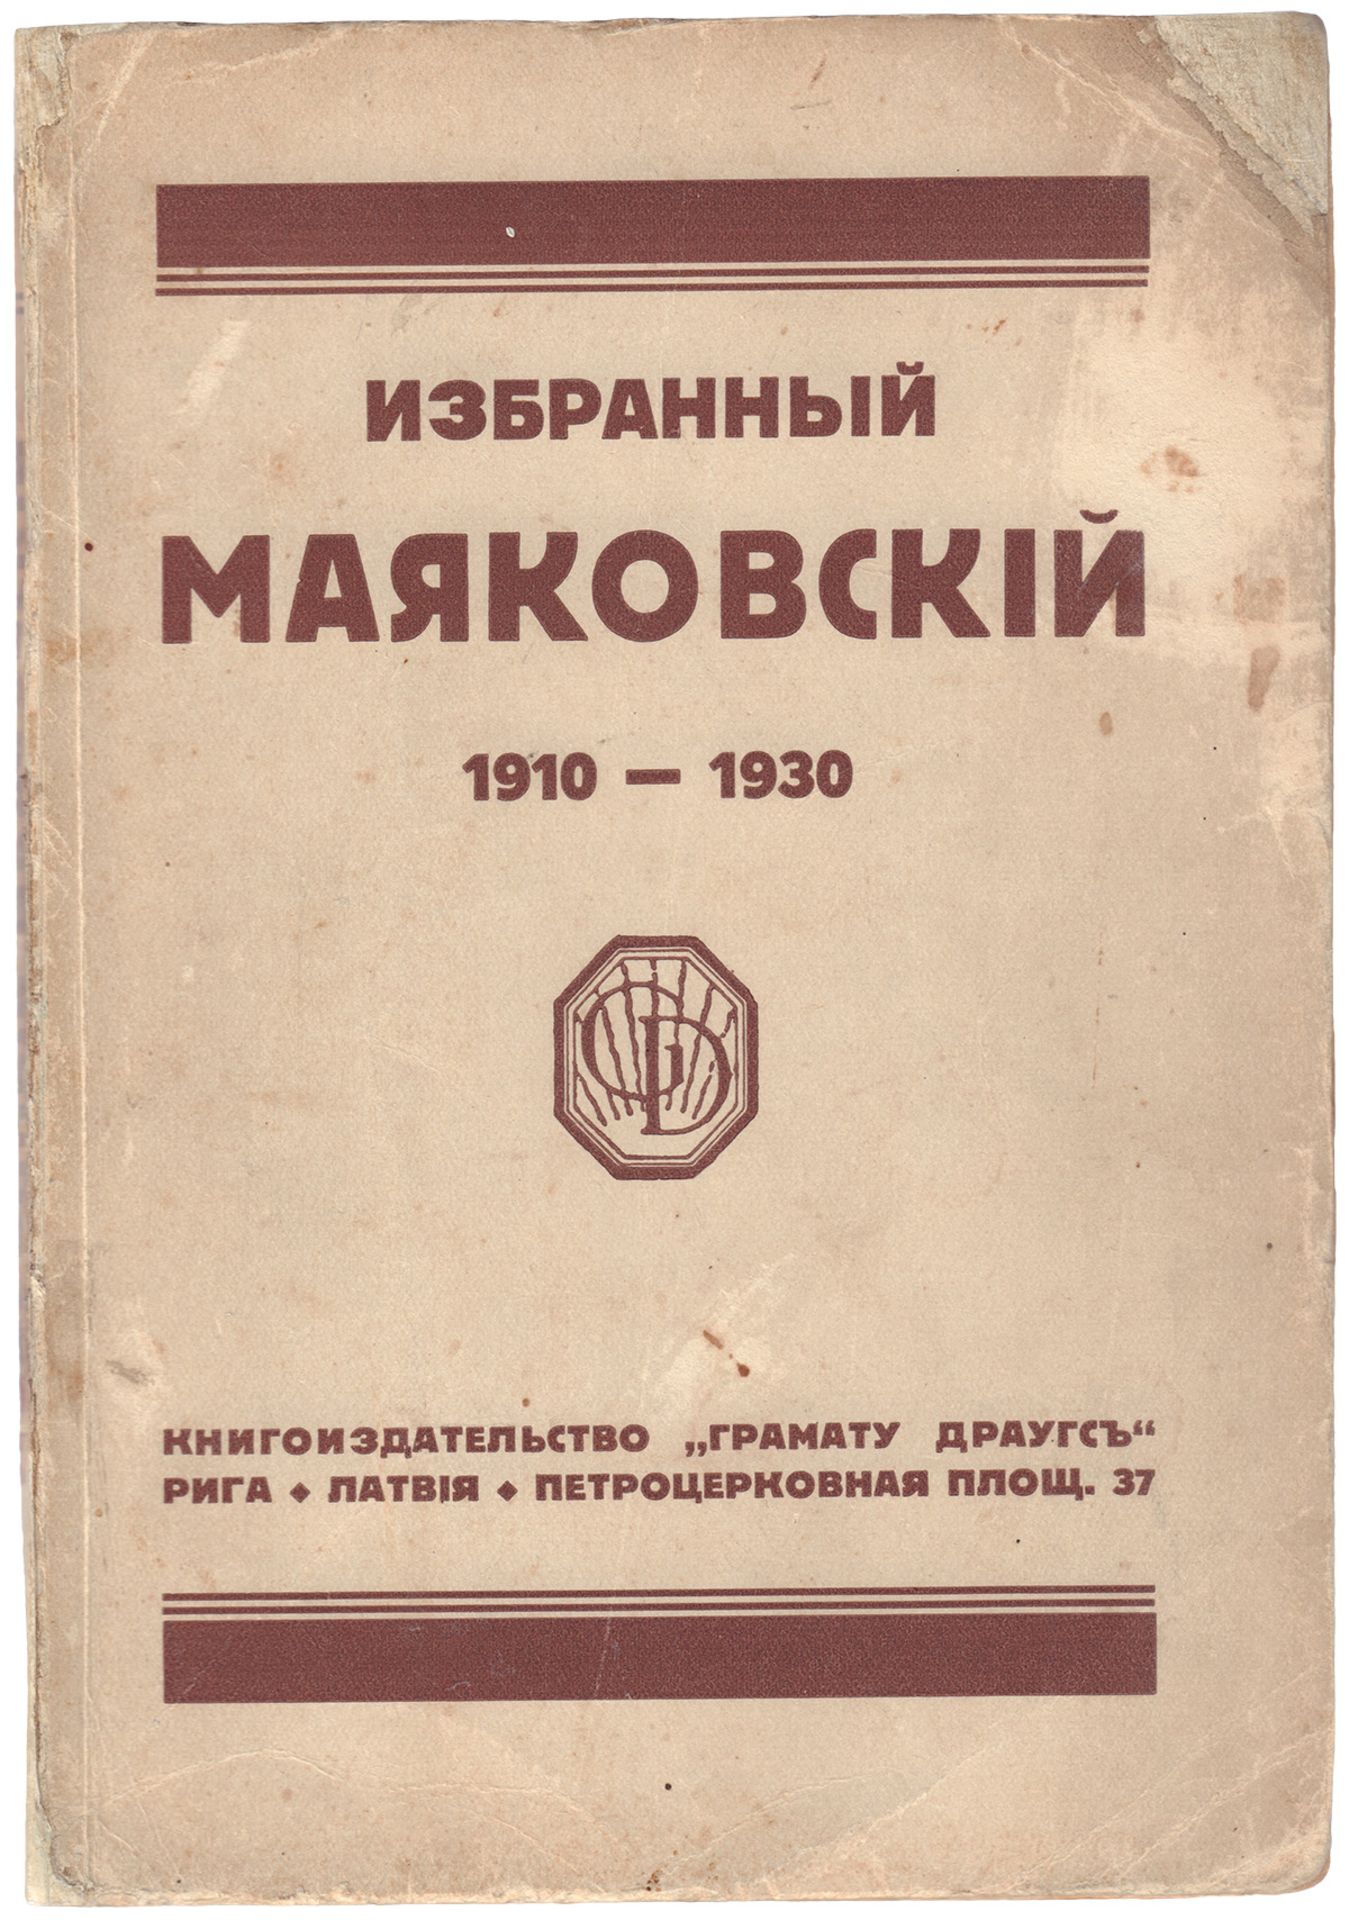 [Soviet]. Mayakovsky, V.V. Selected Mayakovsky. 1910-1930. - Riga: "Gramatu Dragus", 1930. - 157, [3